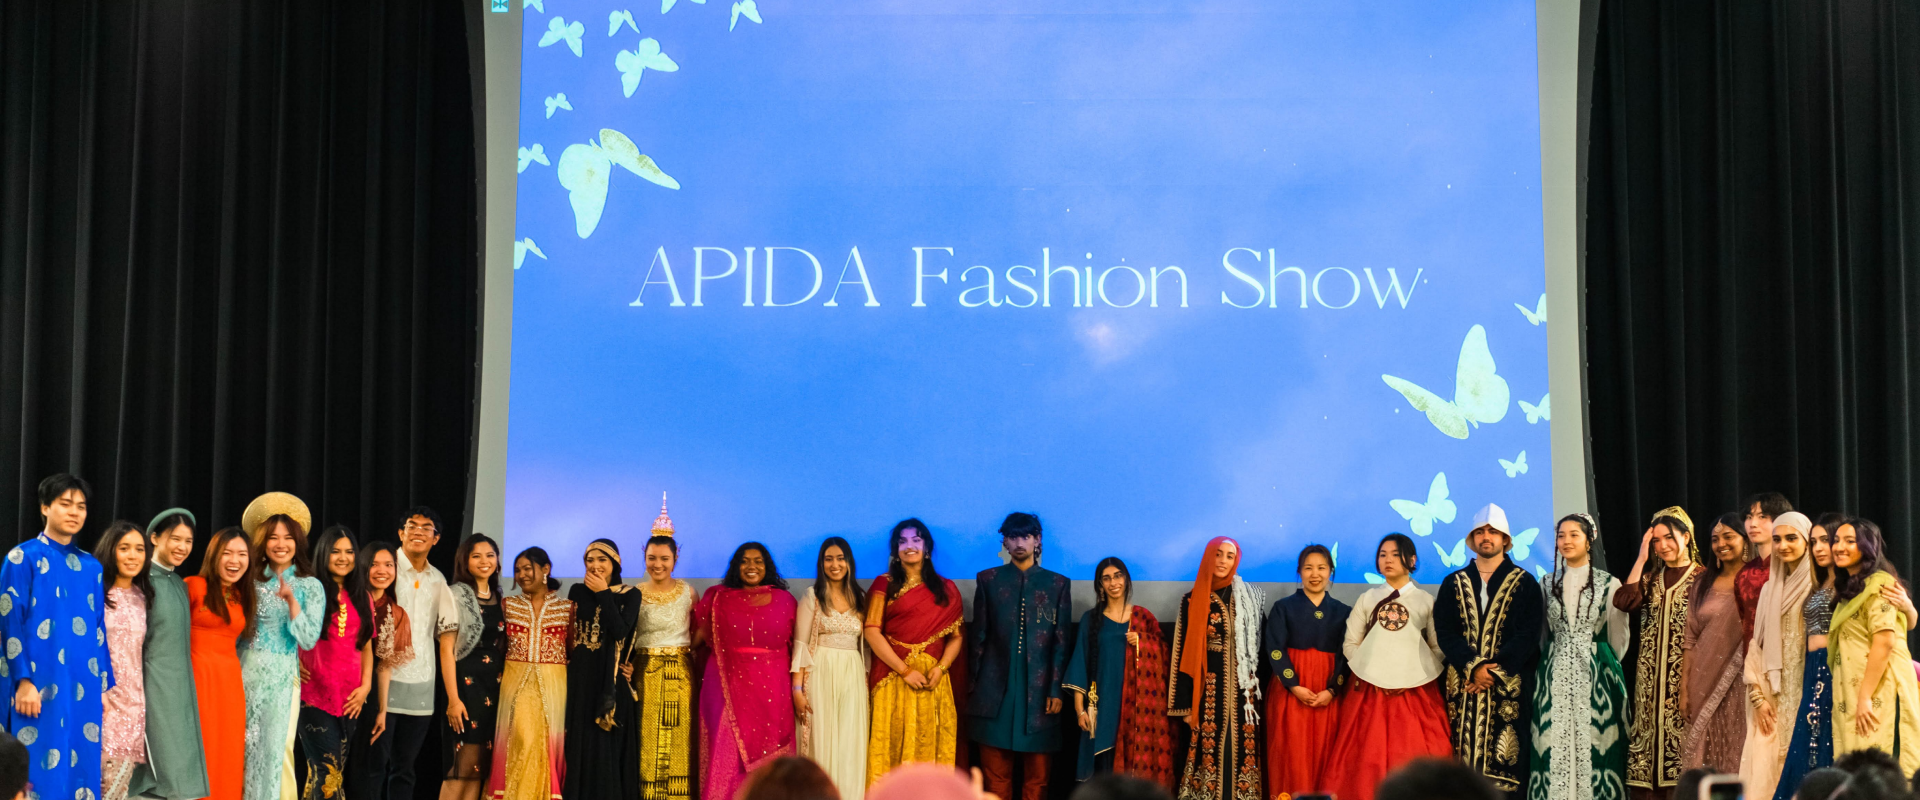 APIDA Fashion Show taken by Patricia Agtarap